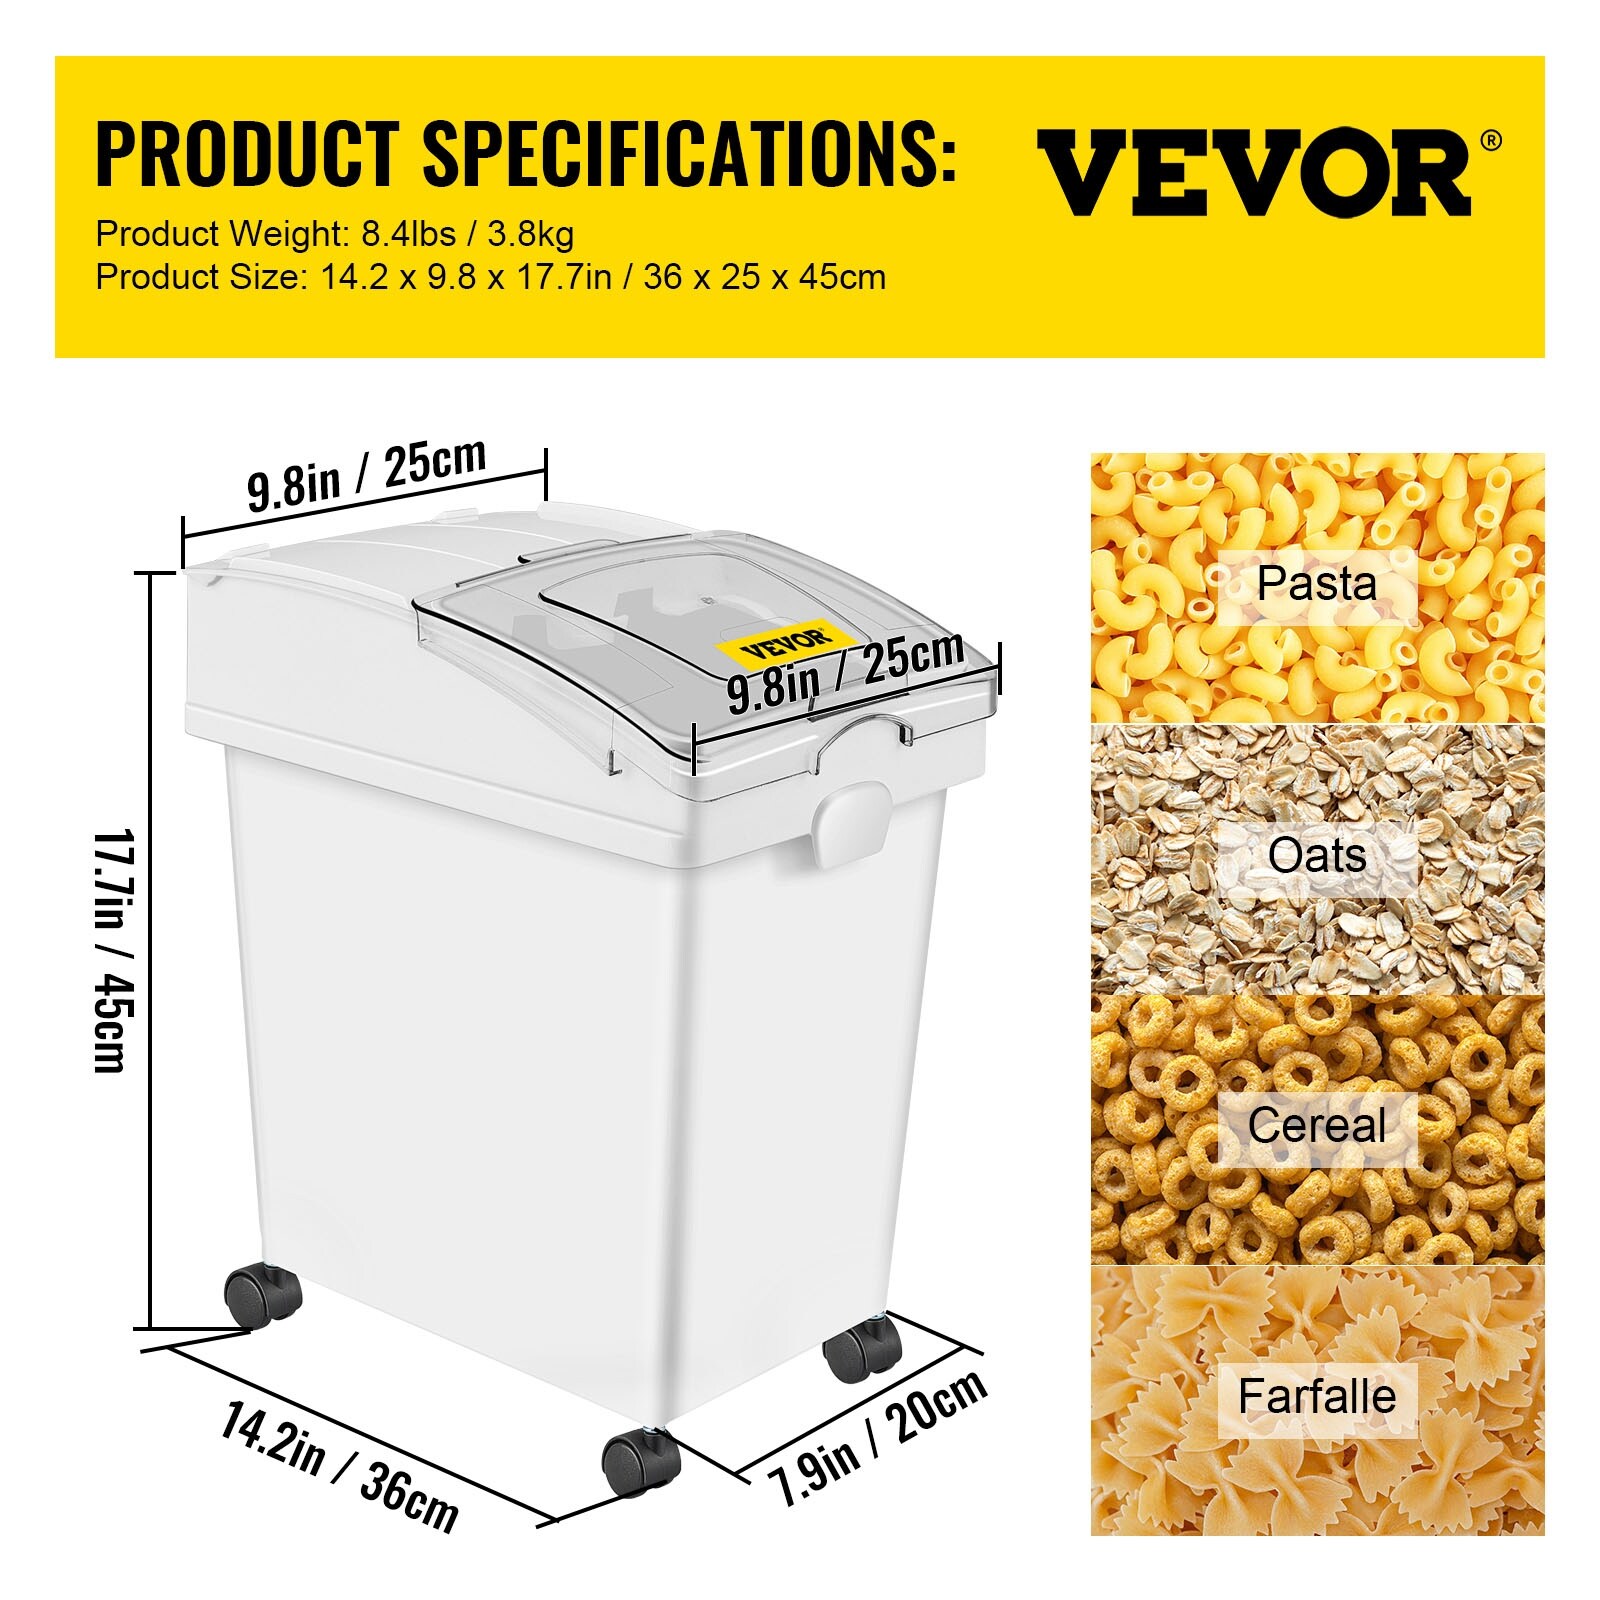 VEVOR Ingredient Bin 10.5+6.6 gal. Ingredient Storage Bin with Wheels PP Material Flour Bins with Scoop, 4 Pcs/Set